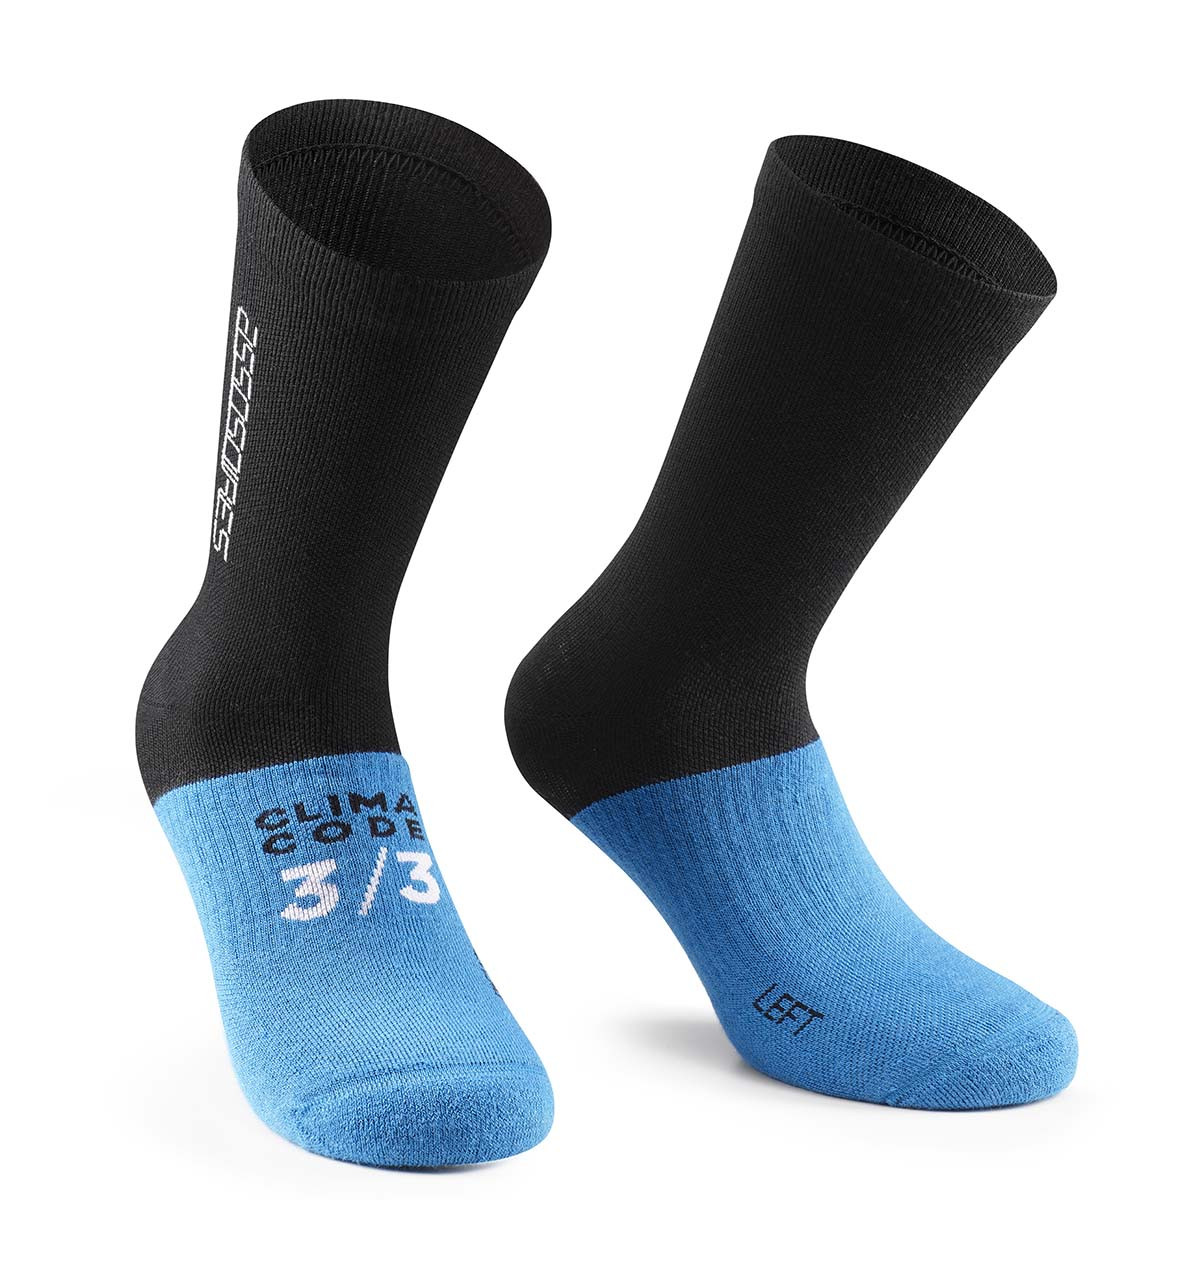 Assos Ultraz Winter Socks Evo  - Blackseries